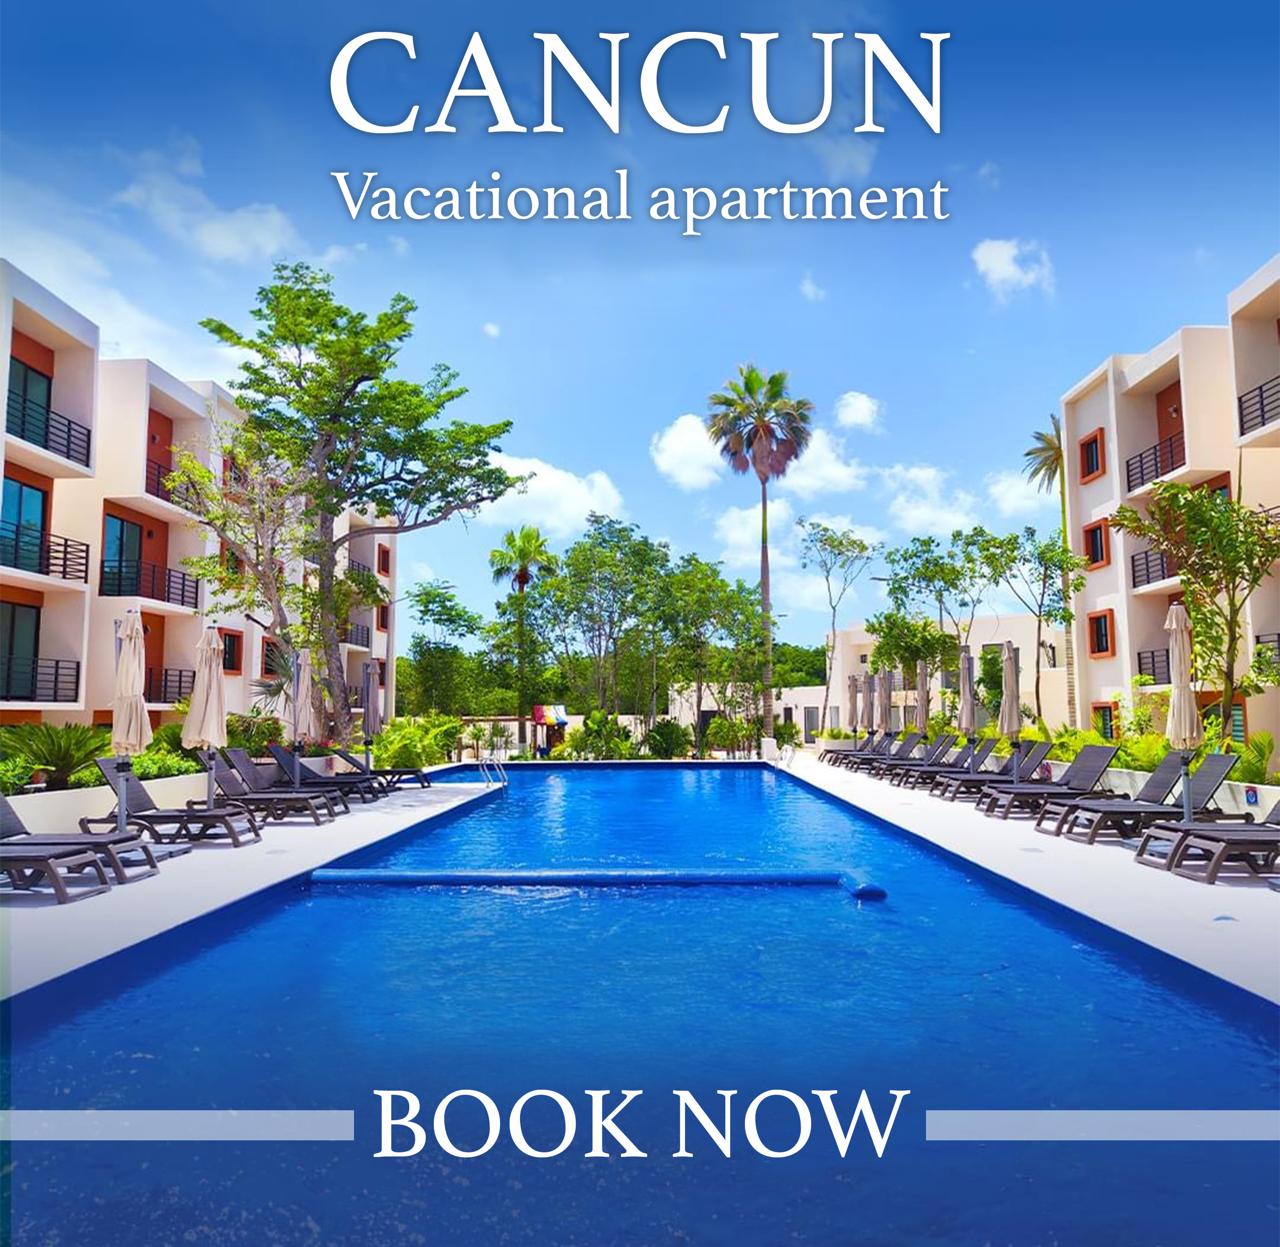 Cancun Vacational Apartments